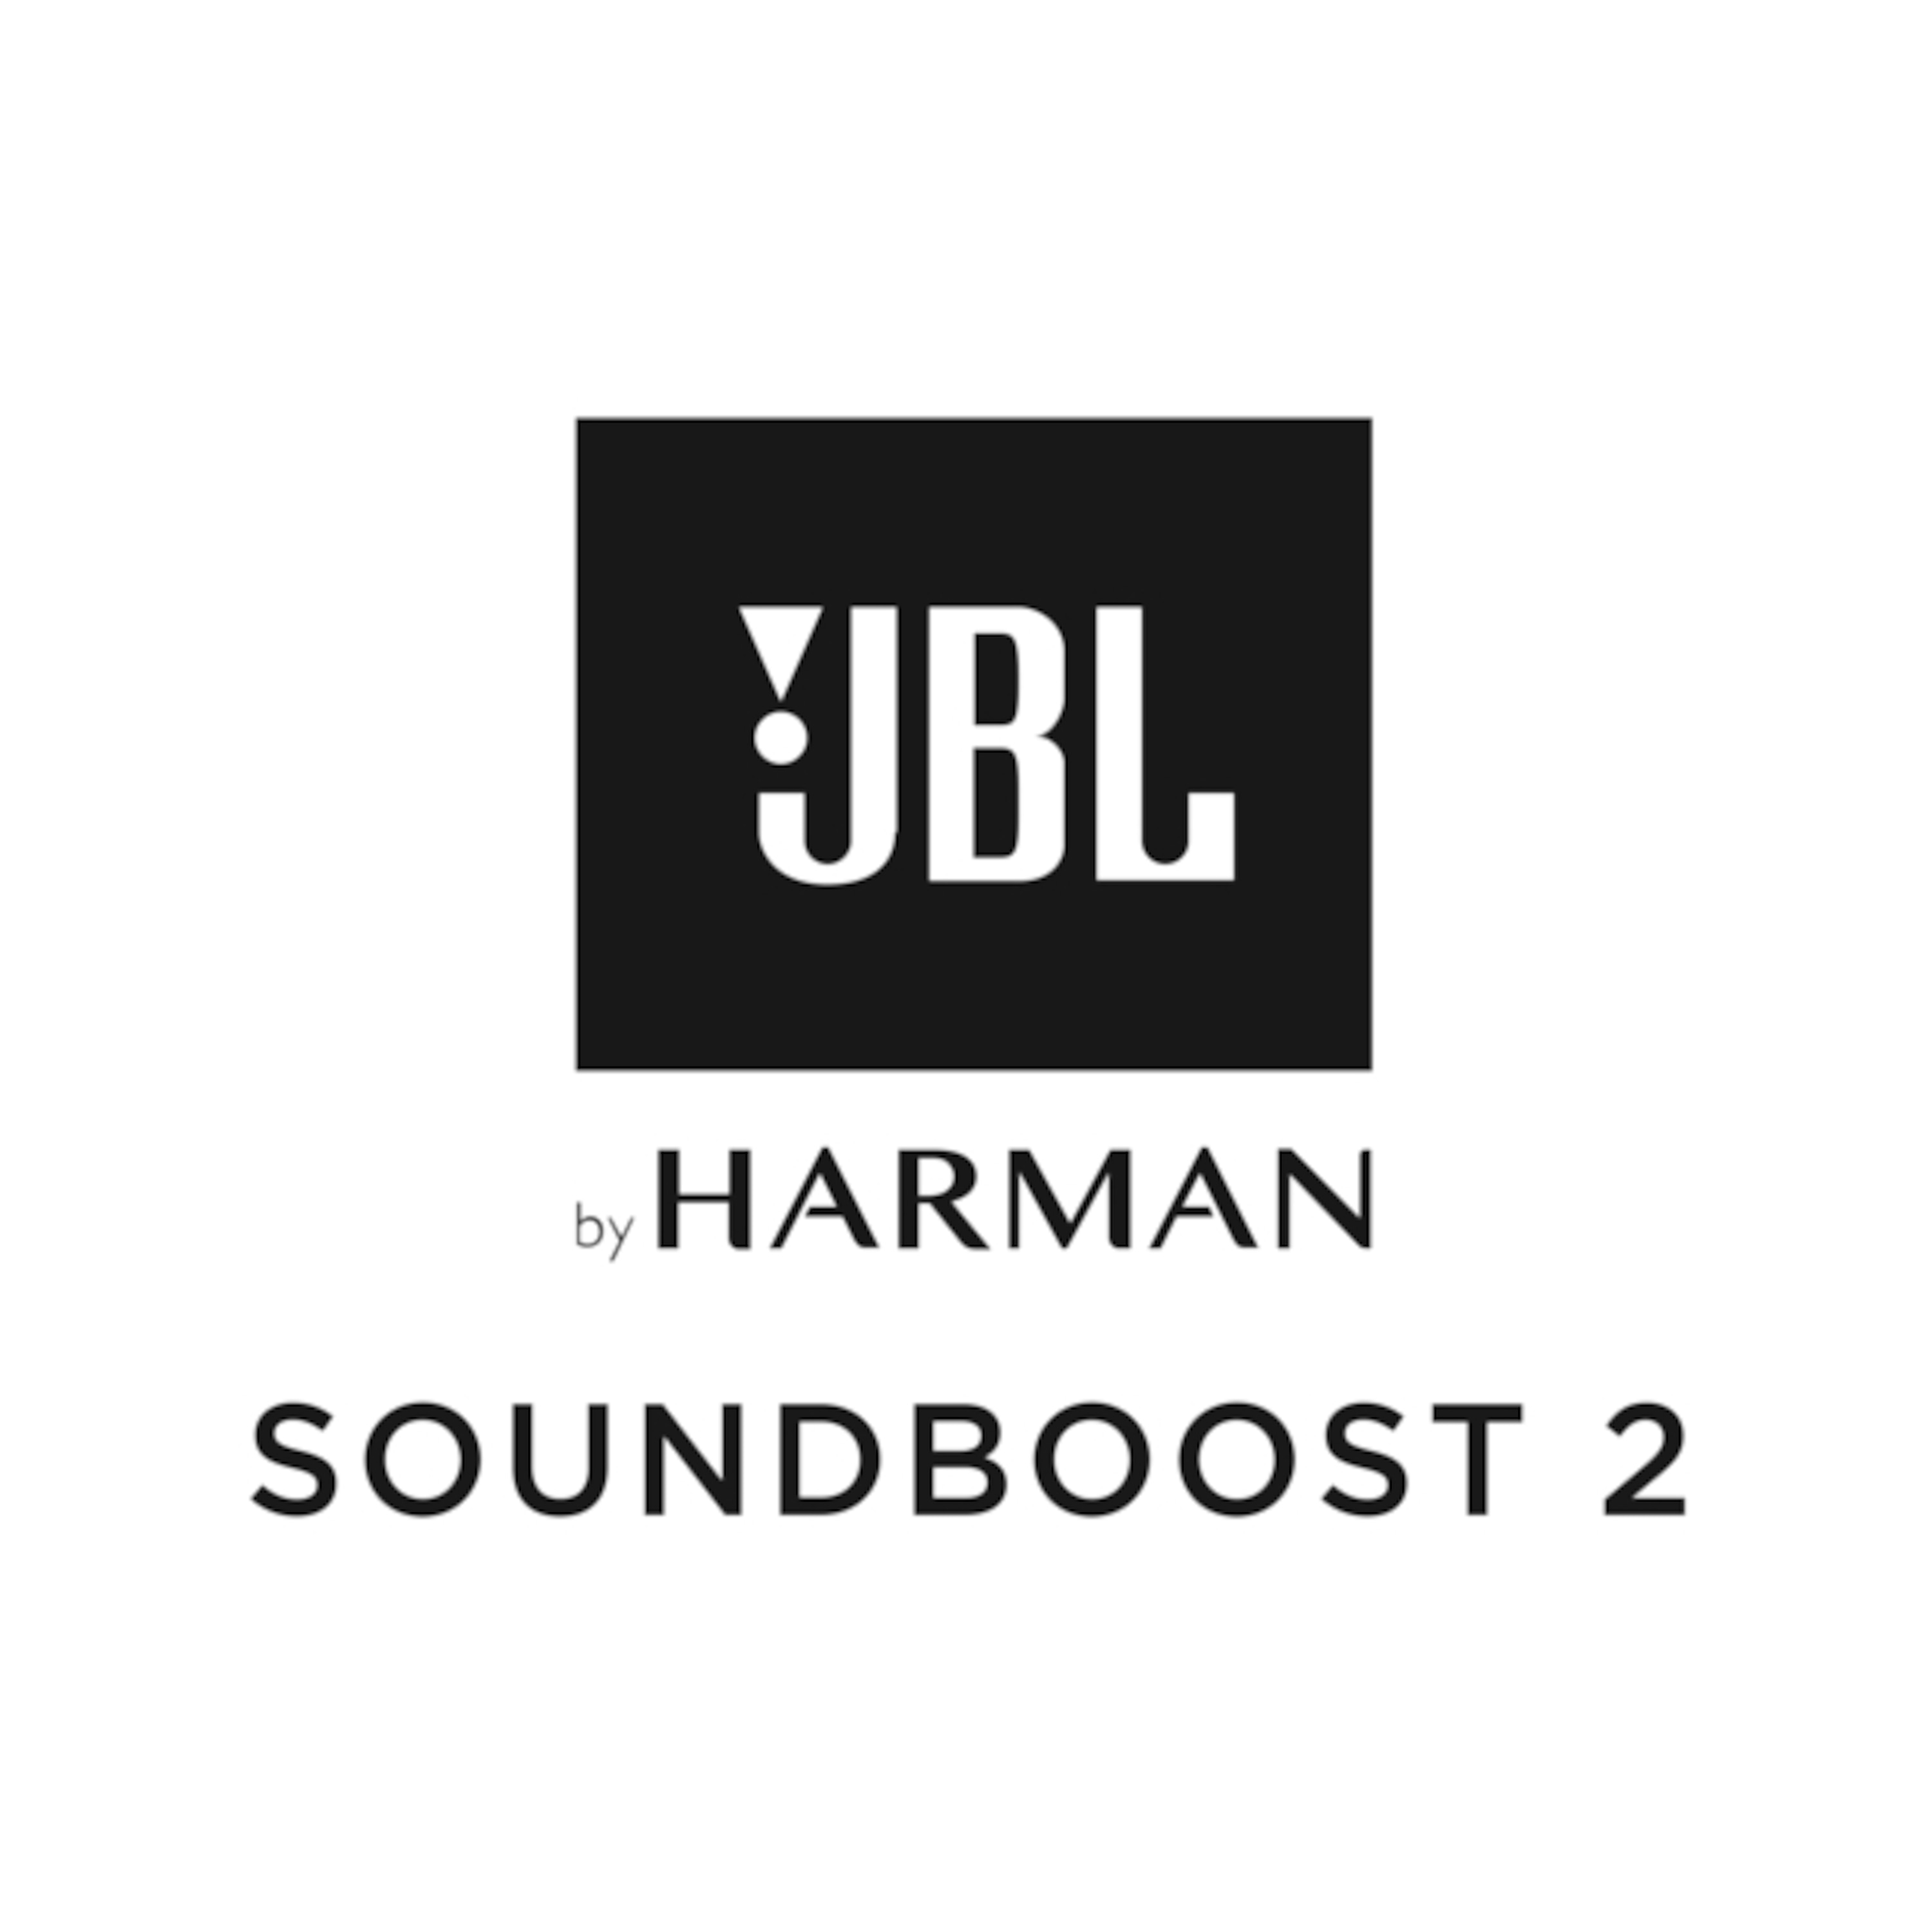 JBL soudboost 2. satter partysound überall.